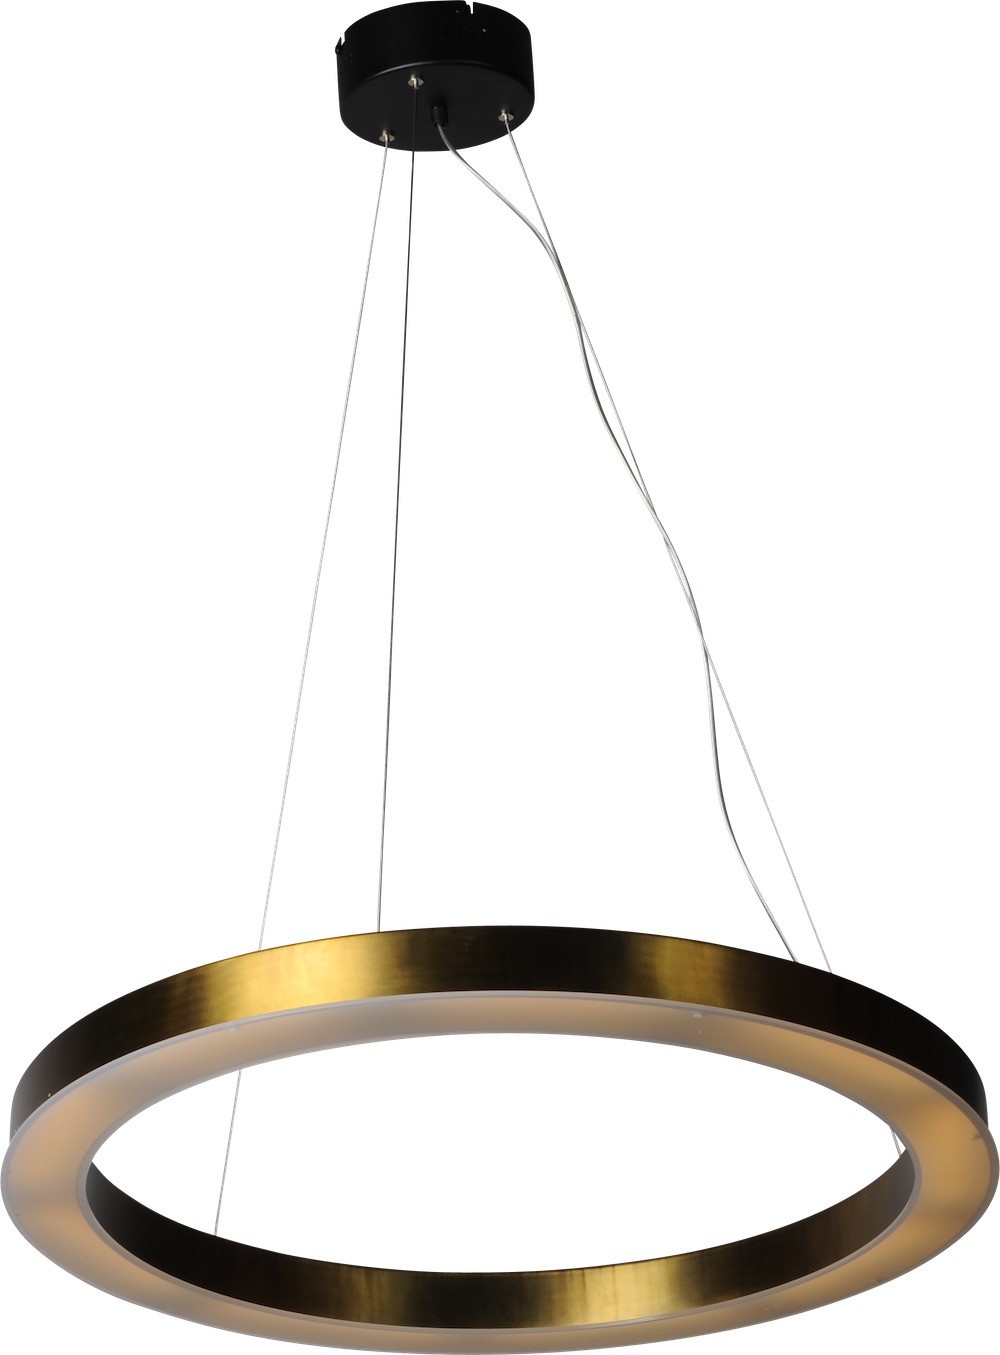 verdrietig Triviaal Begrip Design LED lamp cirkelvormig Antique brass | Hanglampen - Licht &  Accessoires